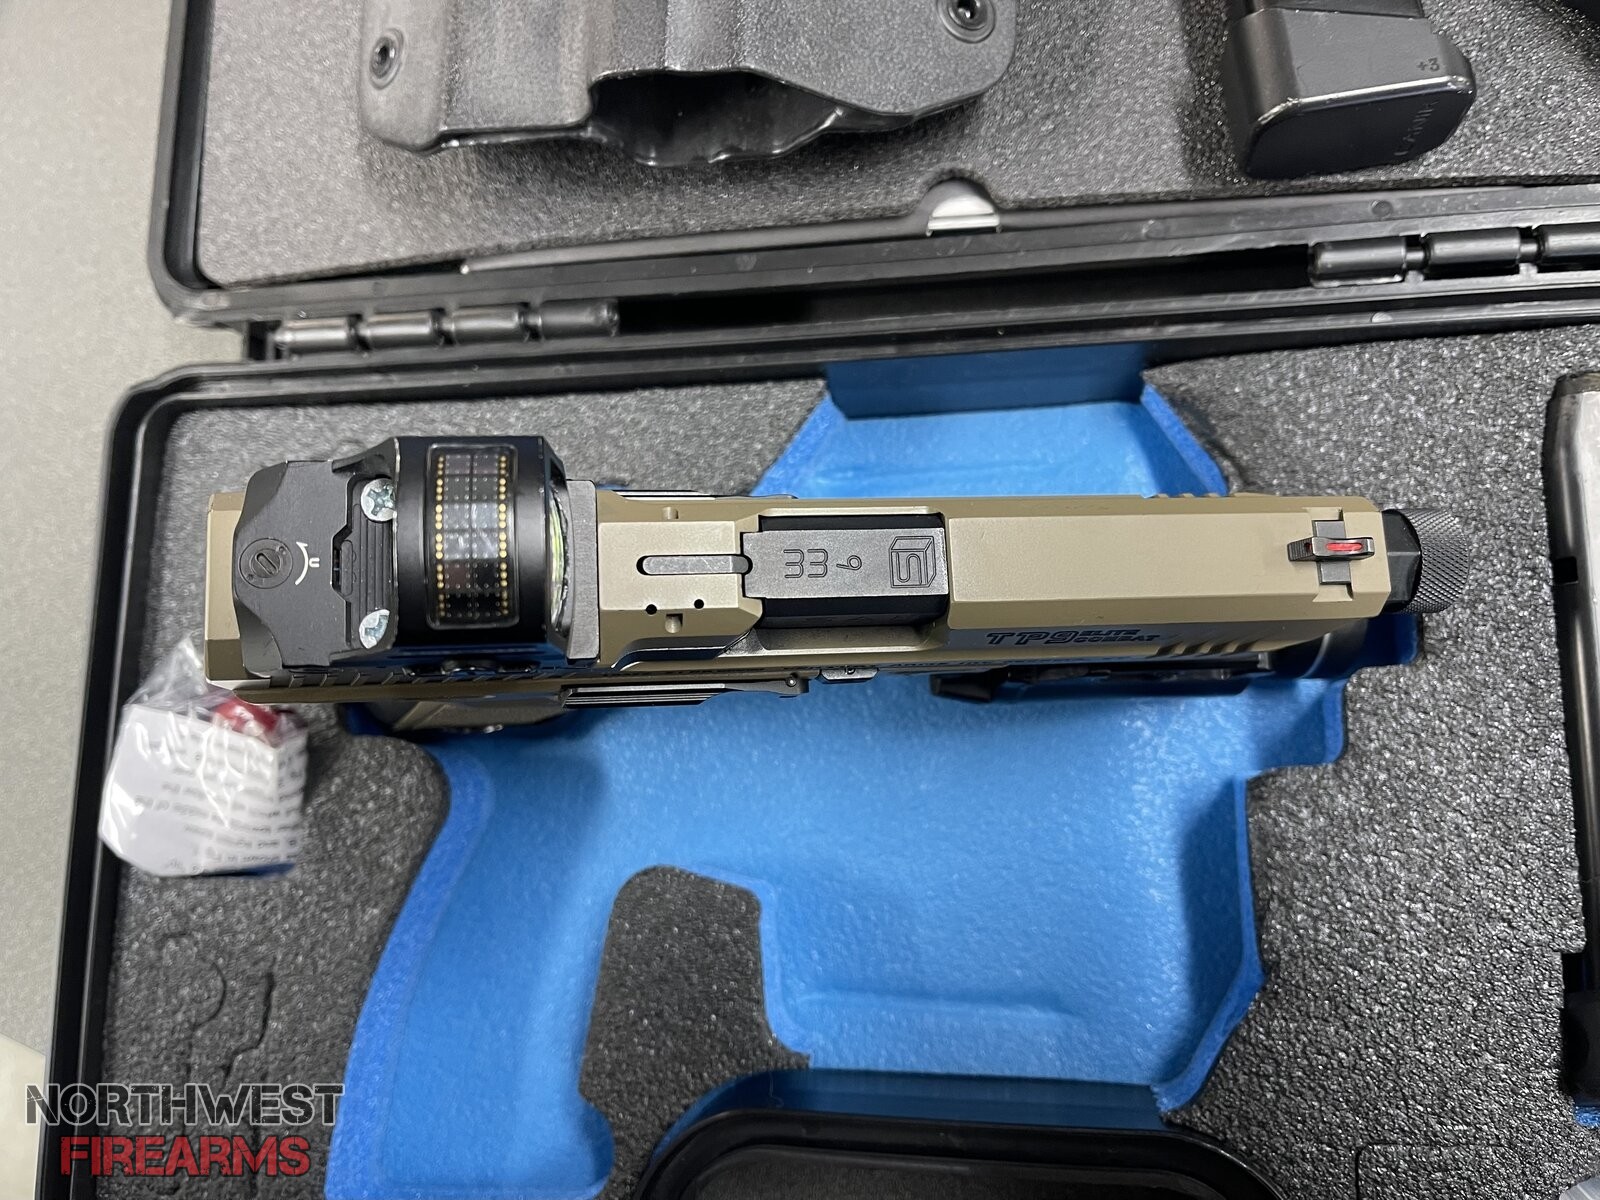 Canik TP9 Elite Combat Pistol, 9mm (1) 15rd. & (1) 18rd. Mag